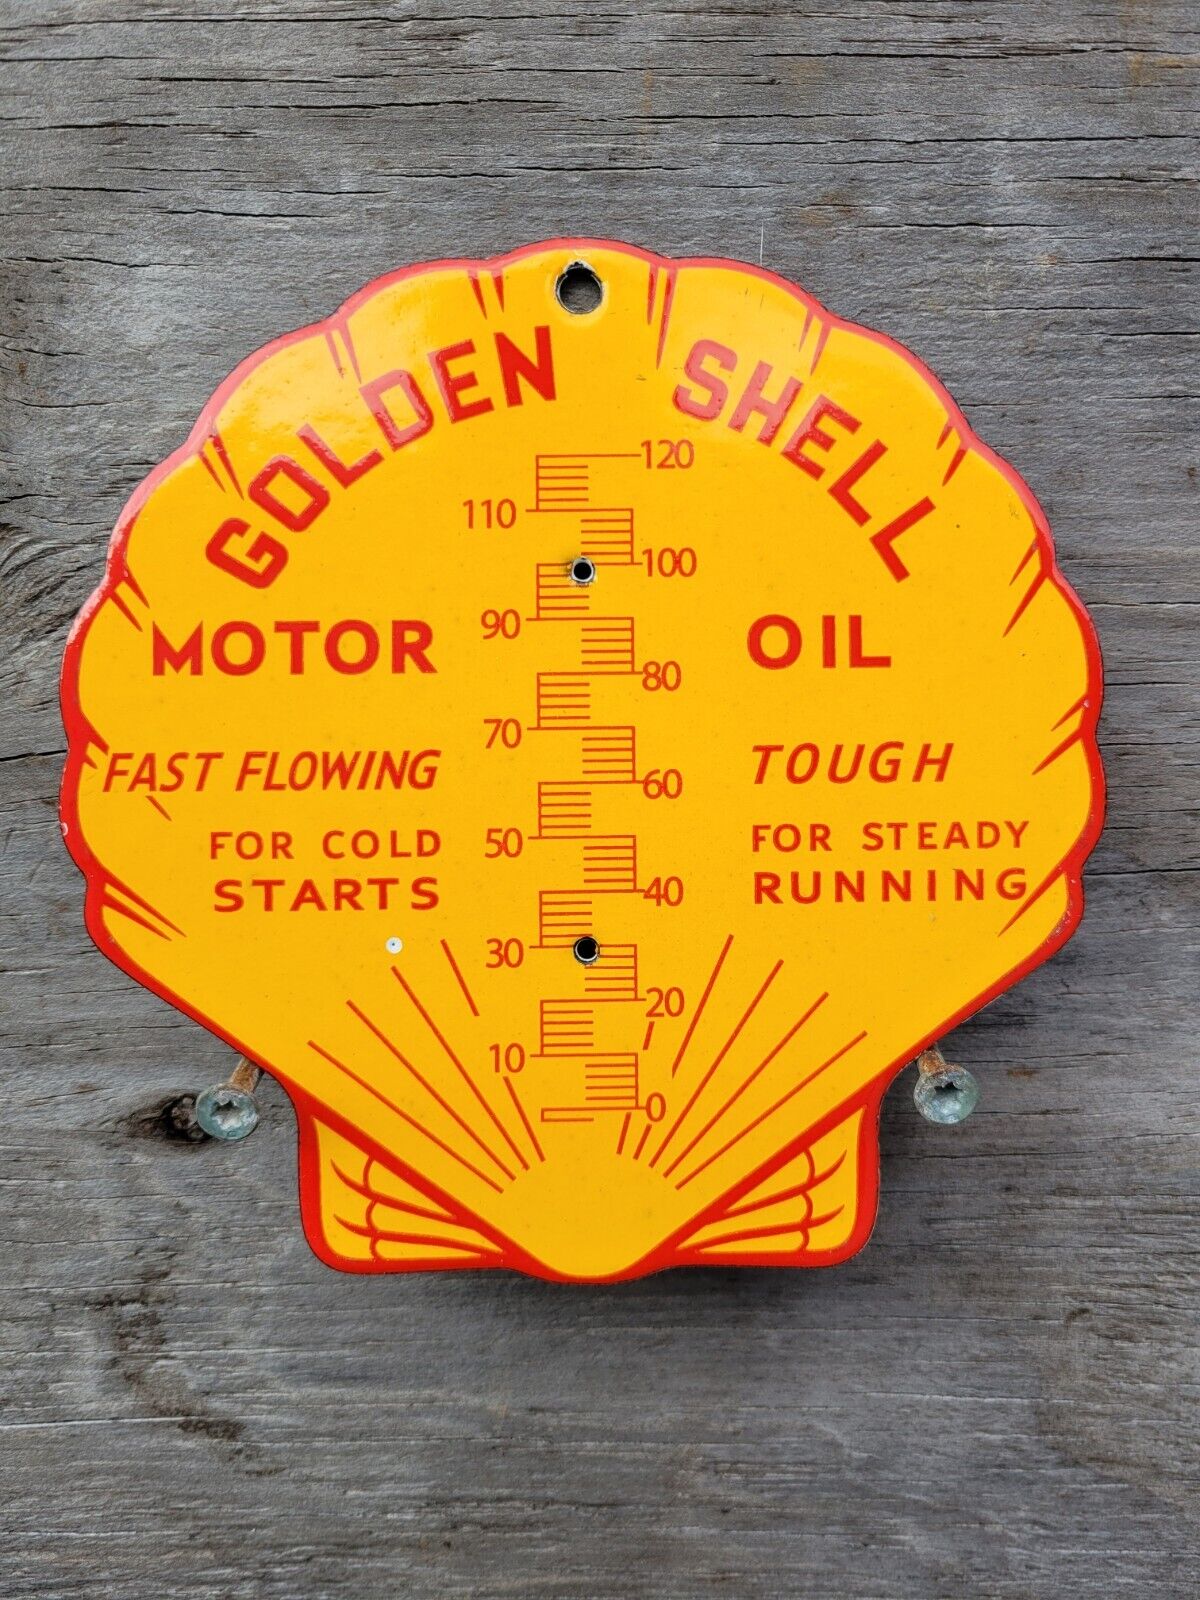 VINTAGE GOLDEN SHELL PORCELAIN SIGN GAS & MOTOR OIL OLD THEMOMETER PLATE BACKER